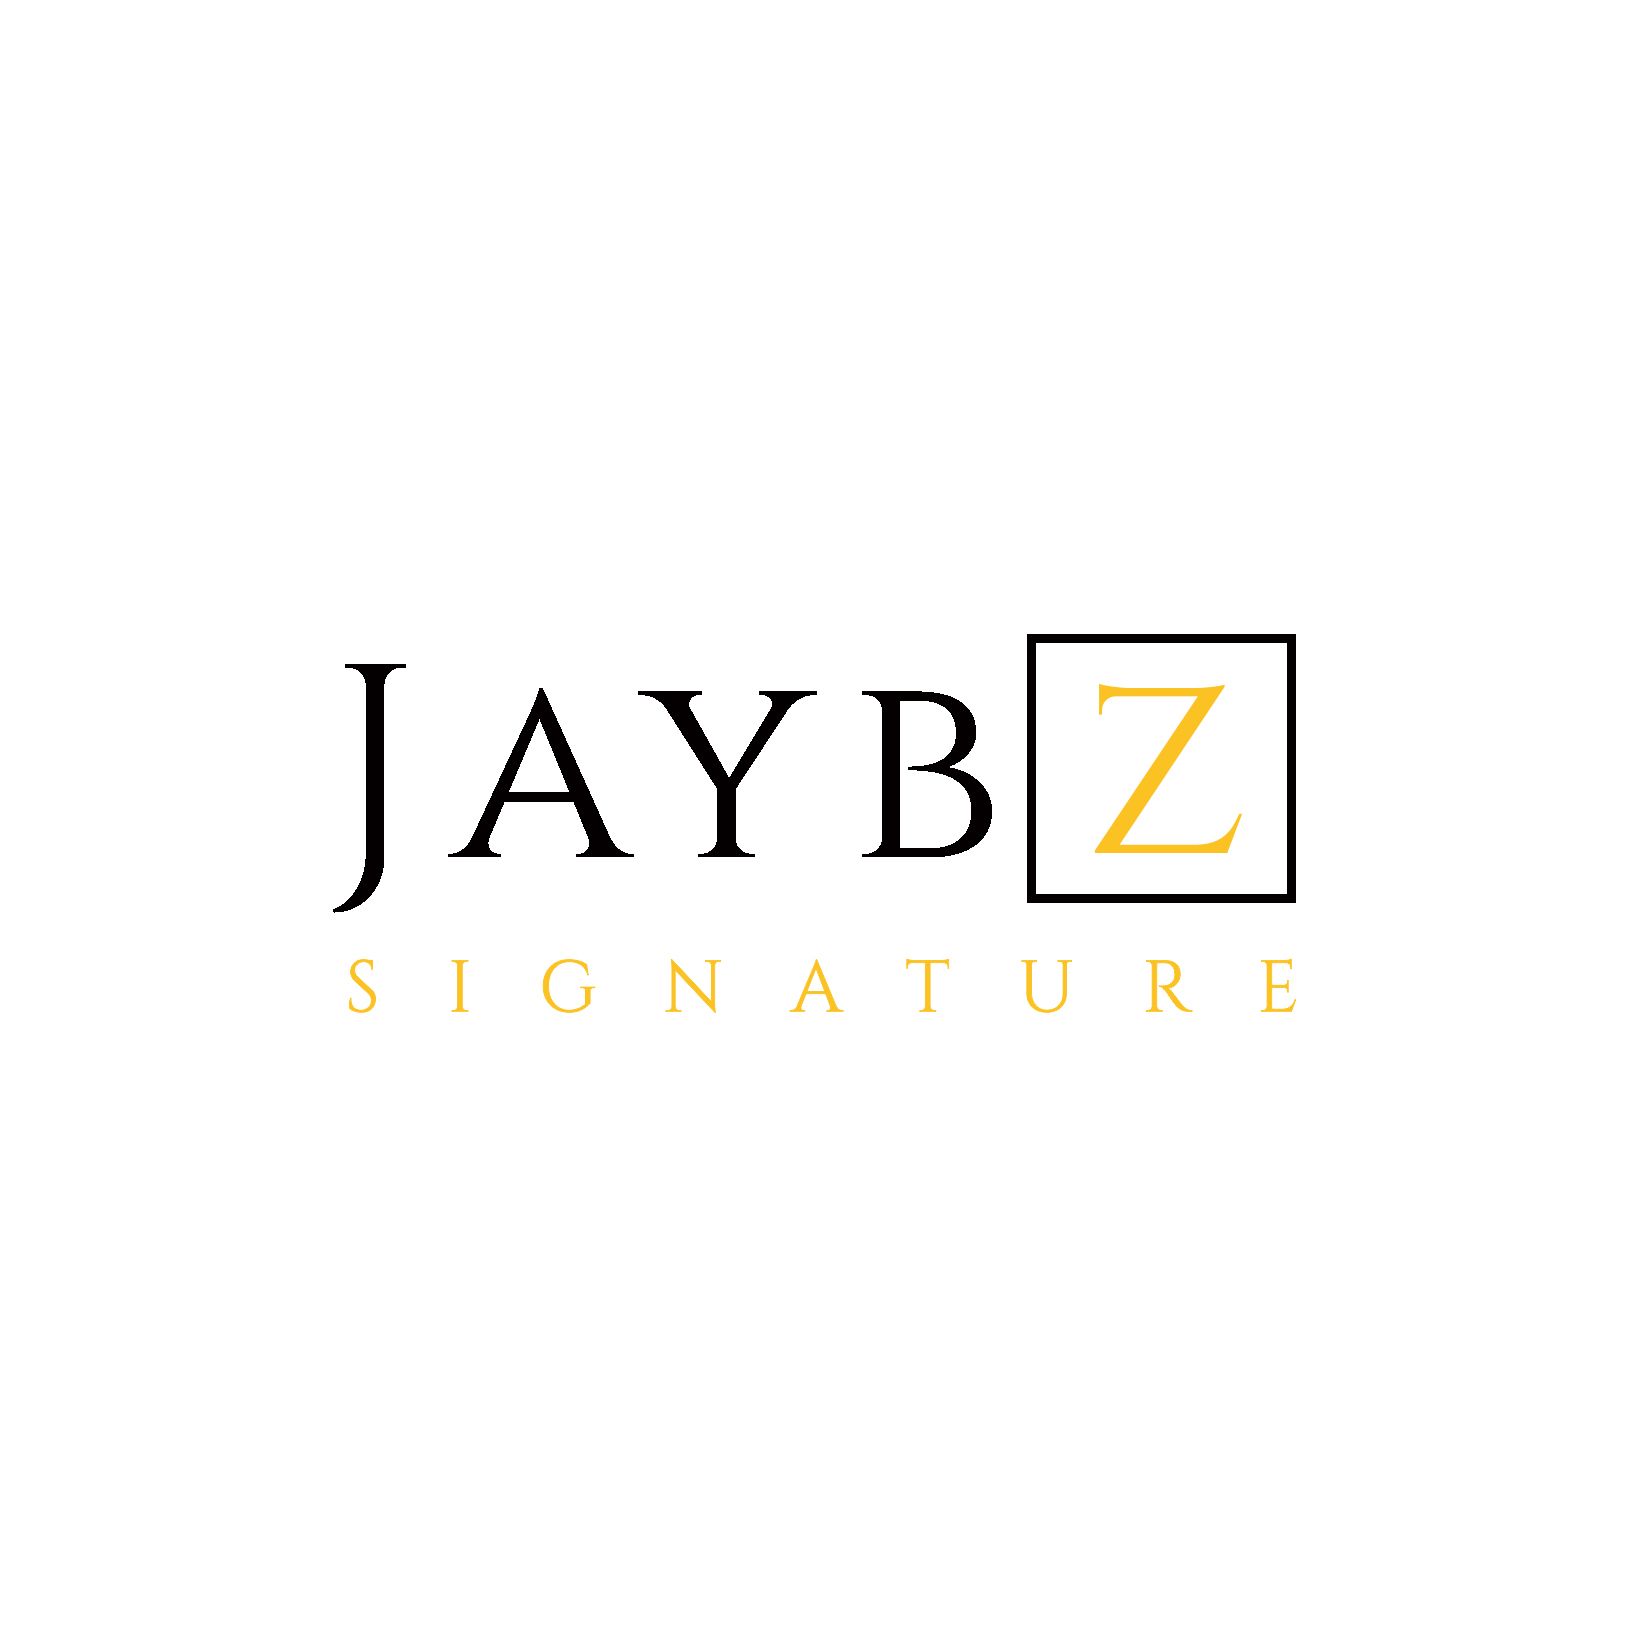 Jaybz Signature